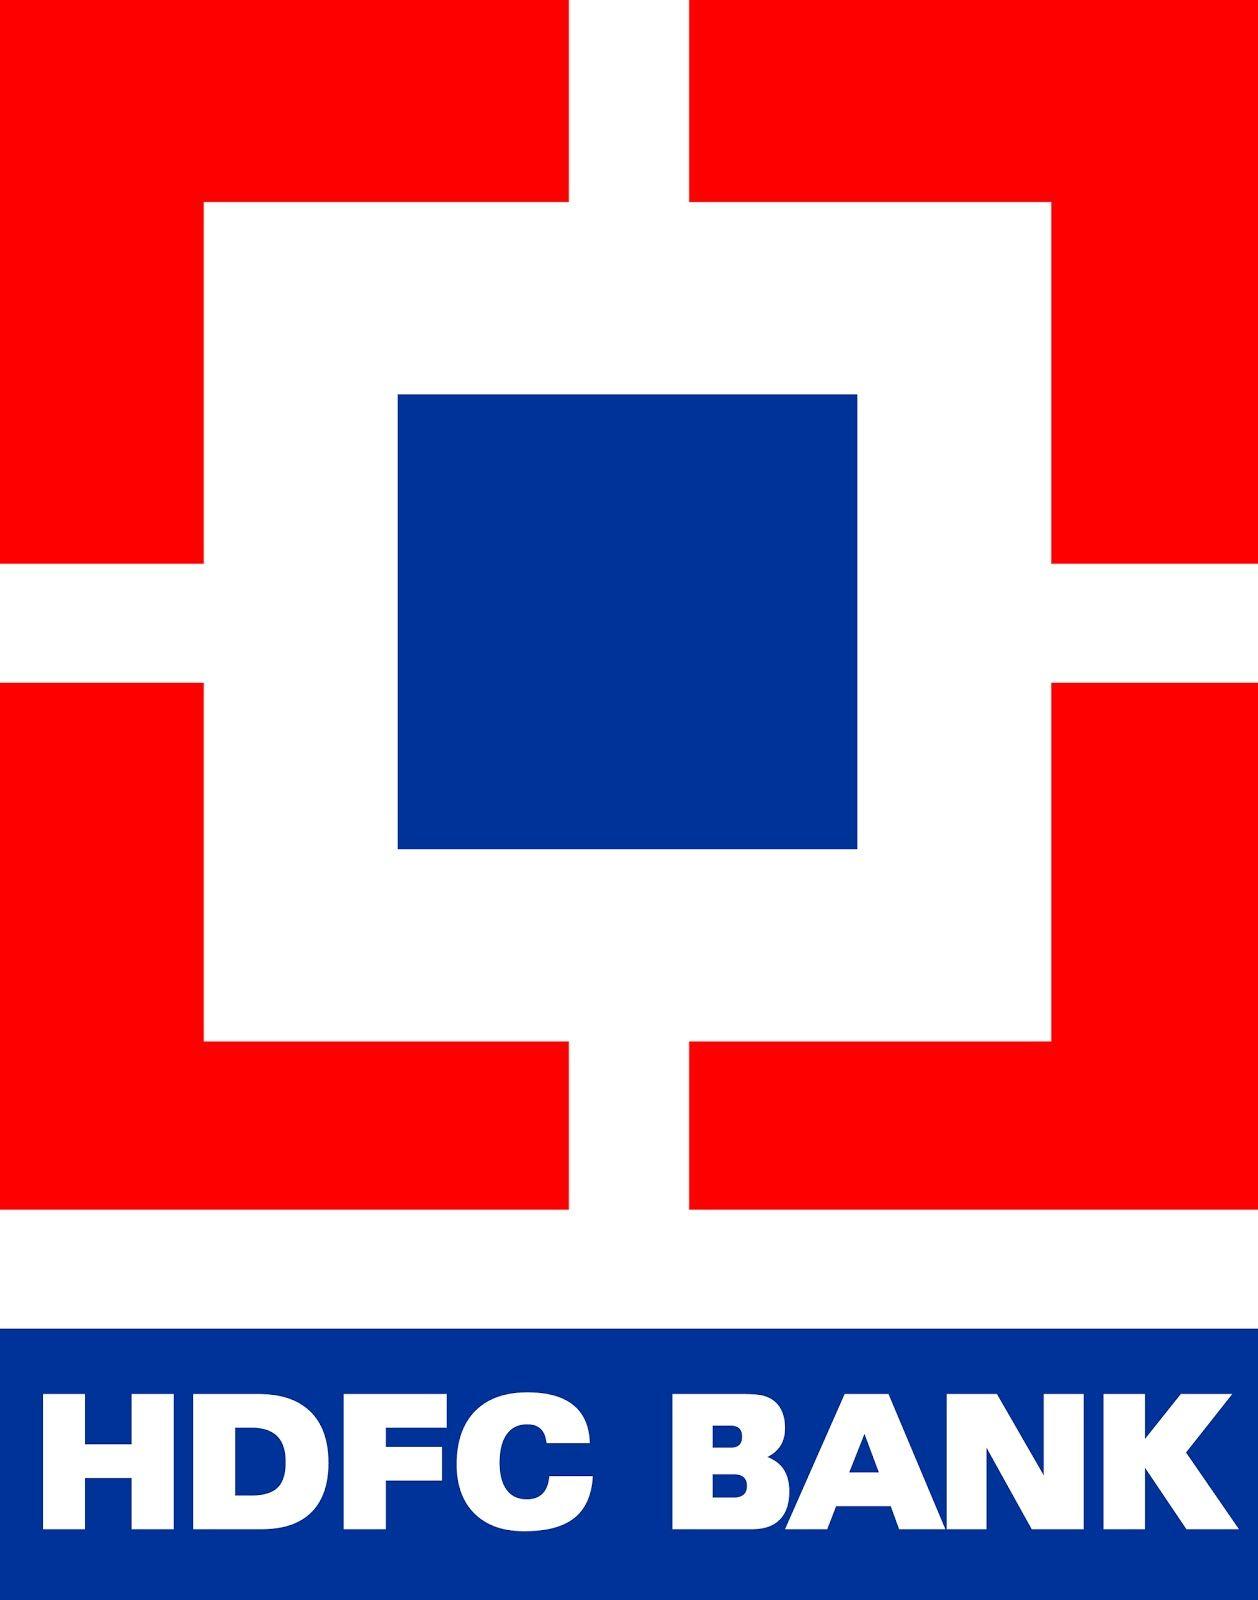 HDFC Bank Logo - HDFC Bank Logo and Tagline